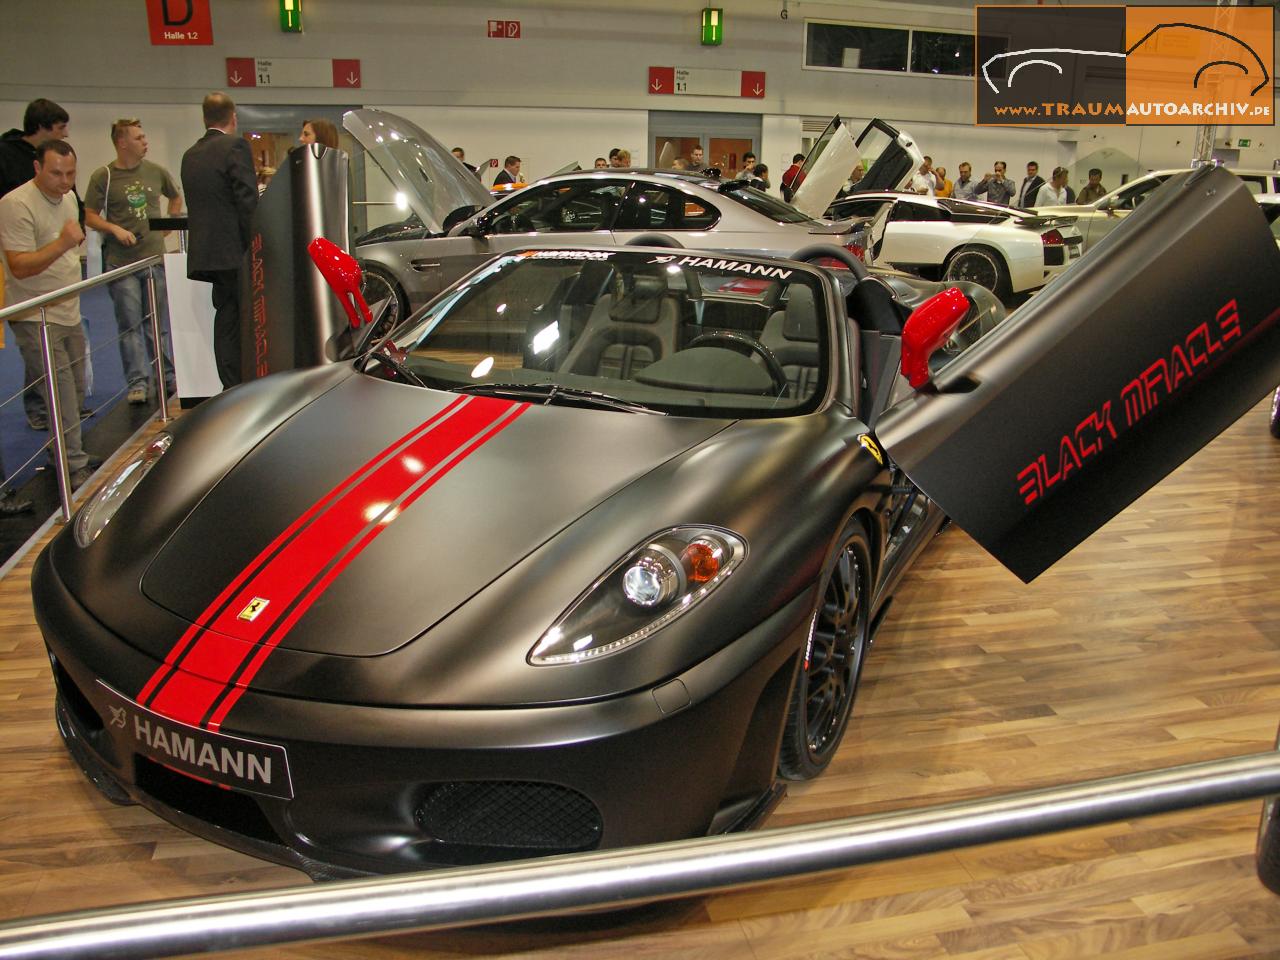 X_Hamann-Ferrari F430 Black Miracle '2007.jpg 173.7K